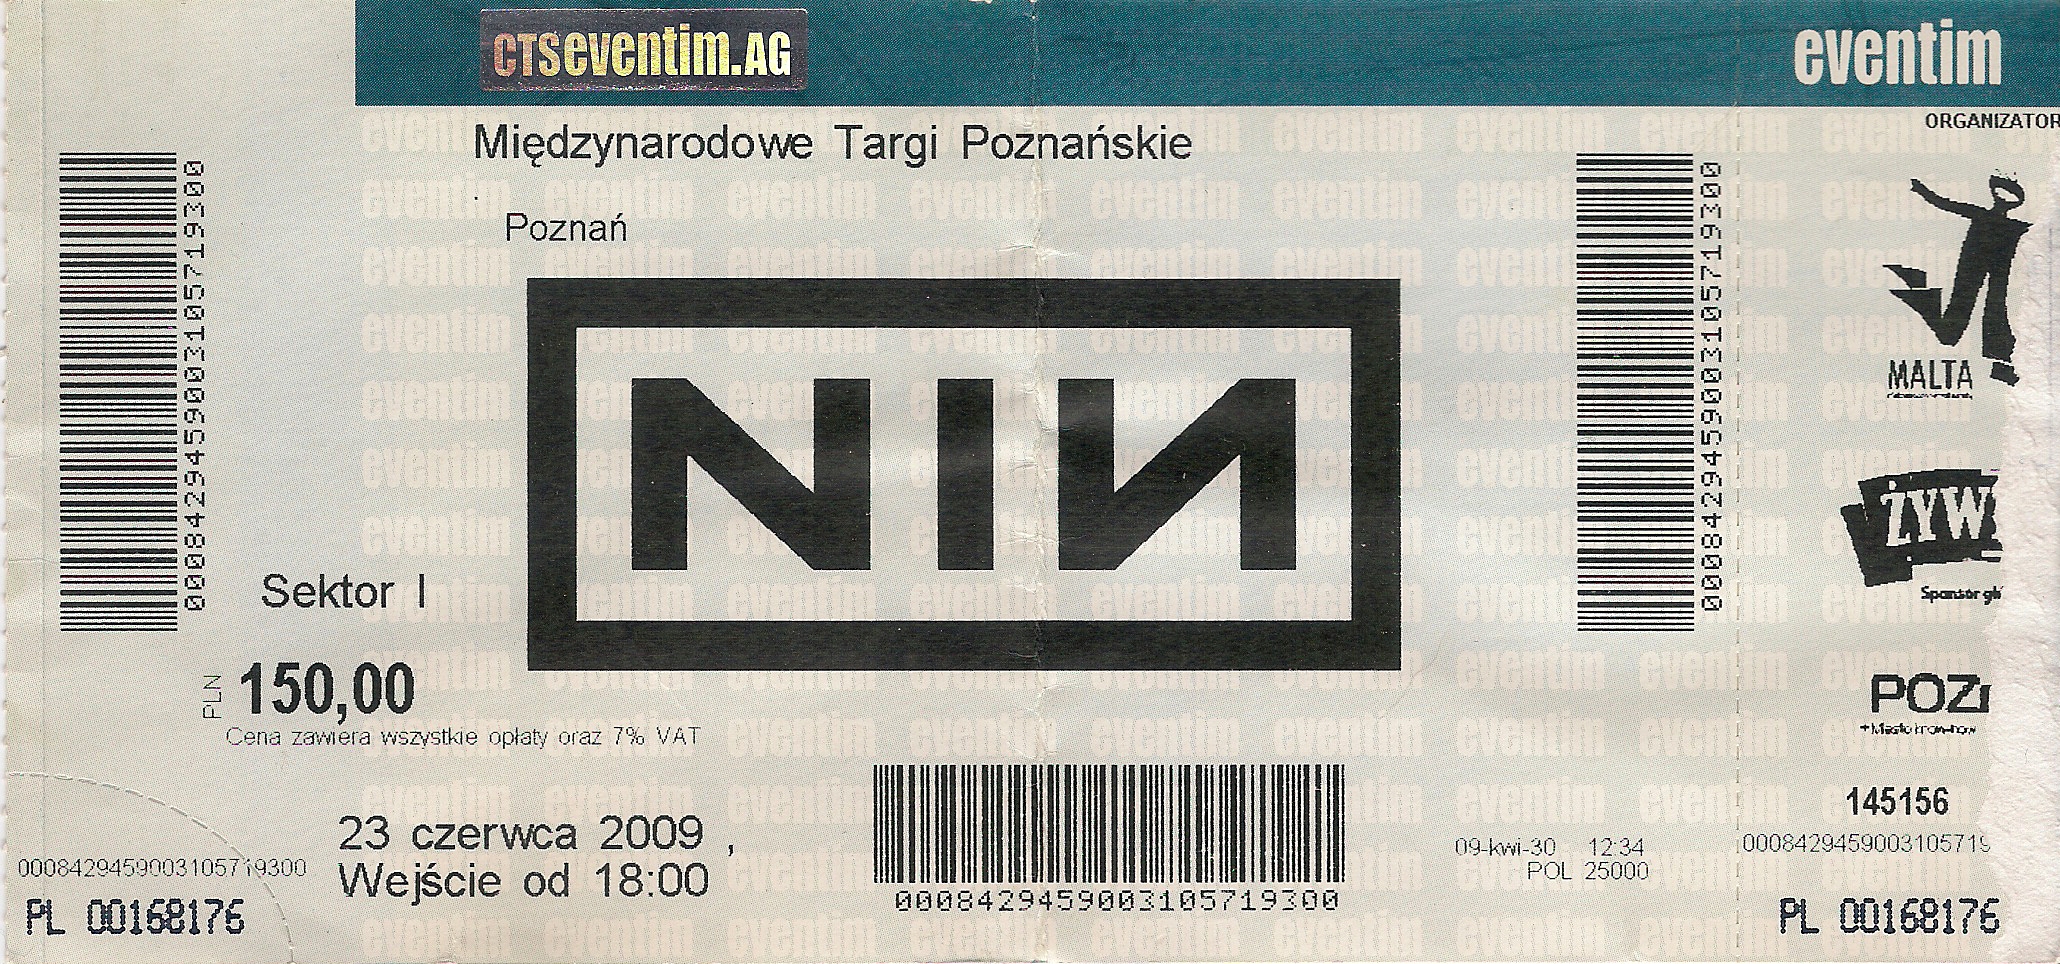 2009/06/23 Ticket